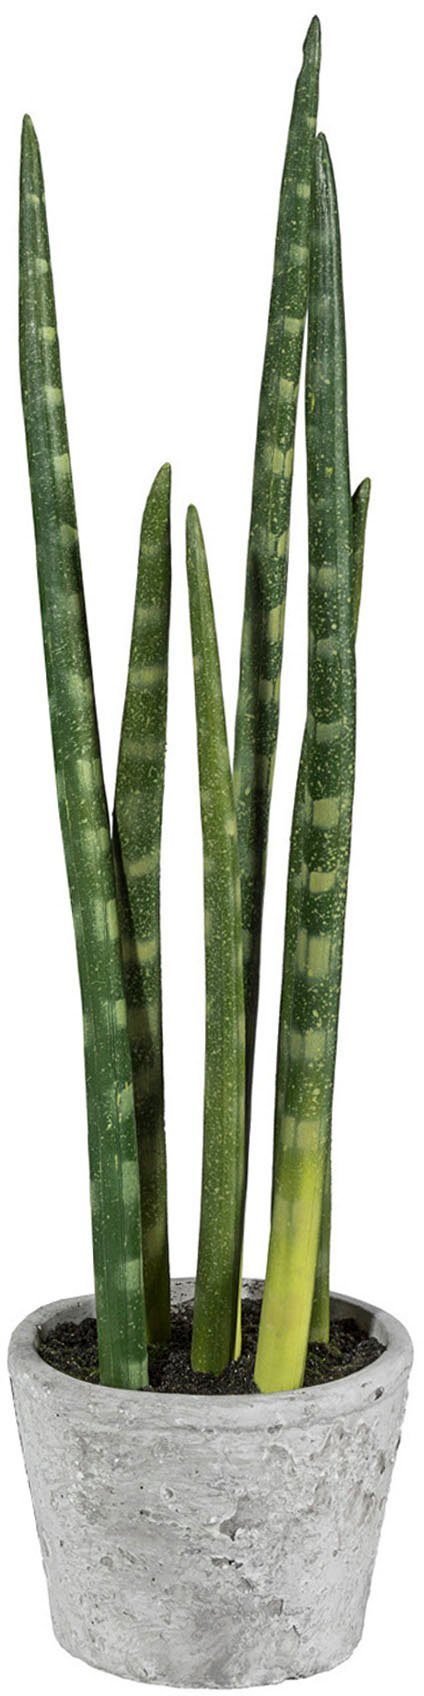 Kunstpflanze Sanseveria, Creativ green, cm 40 Höhe